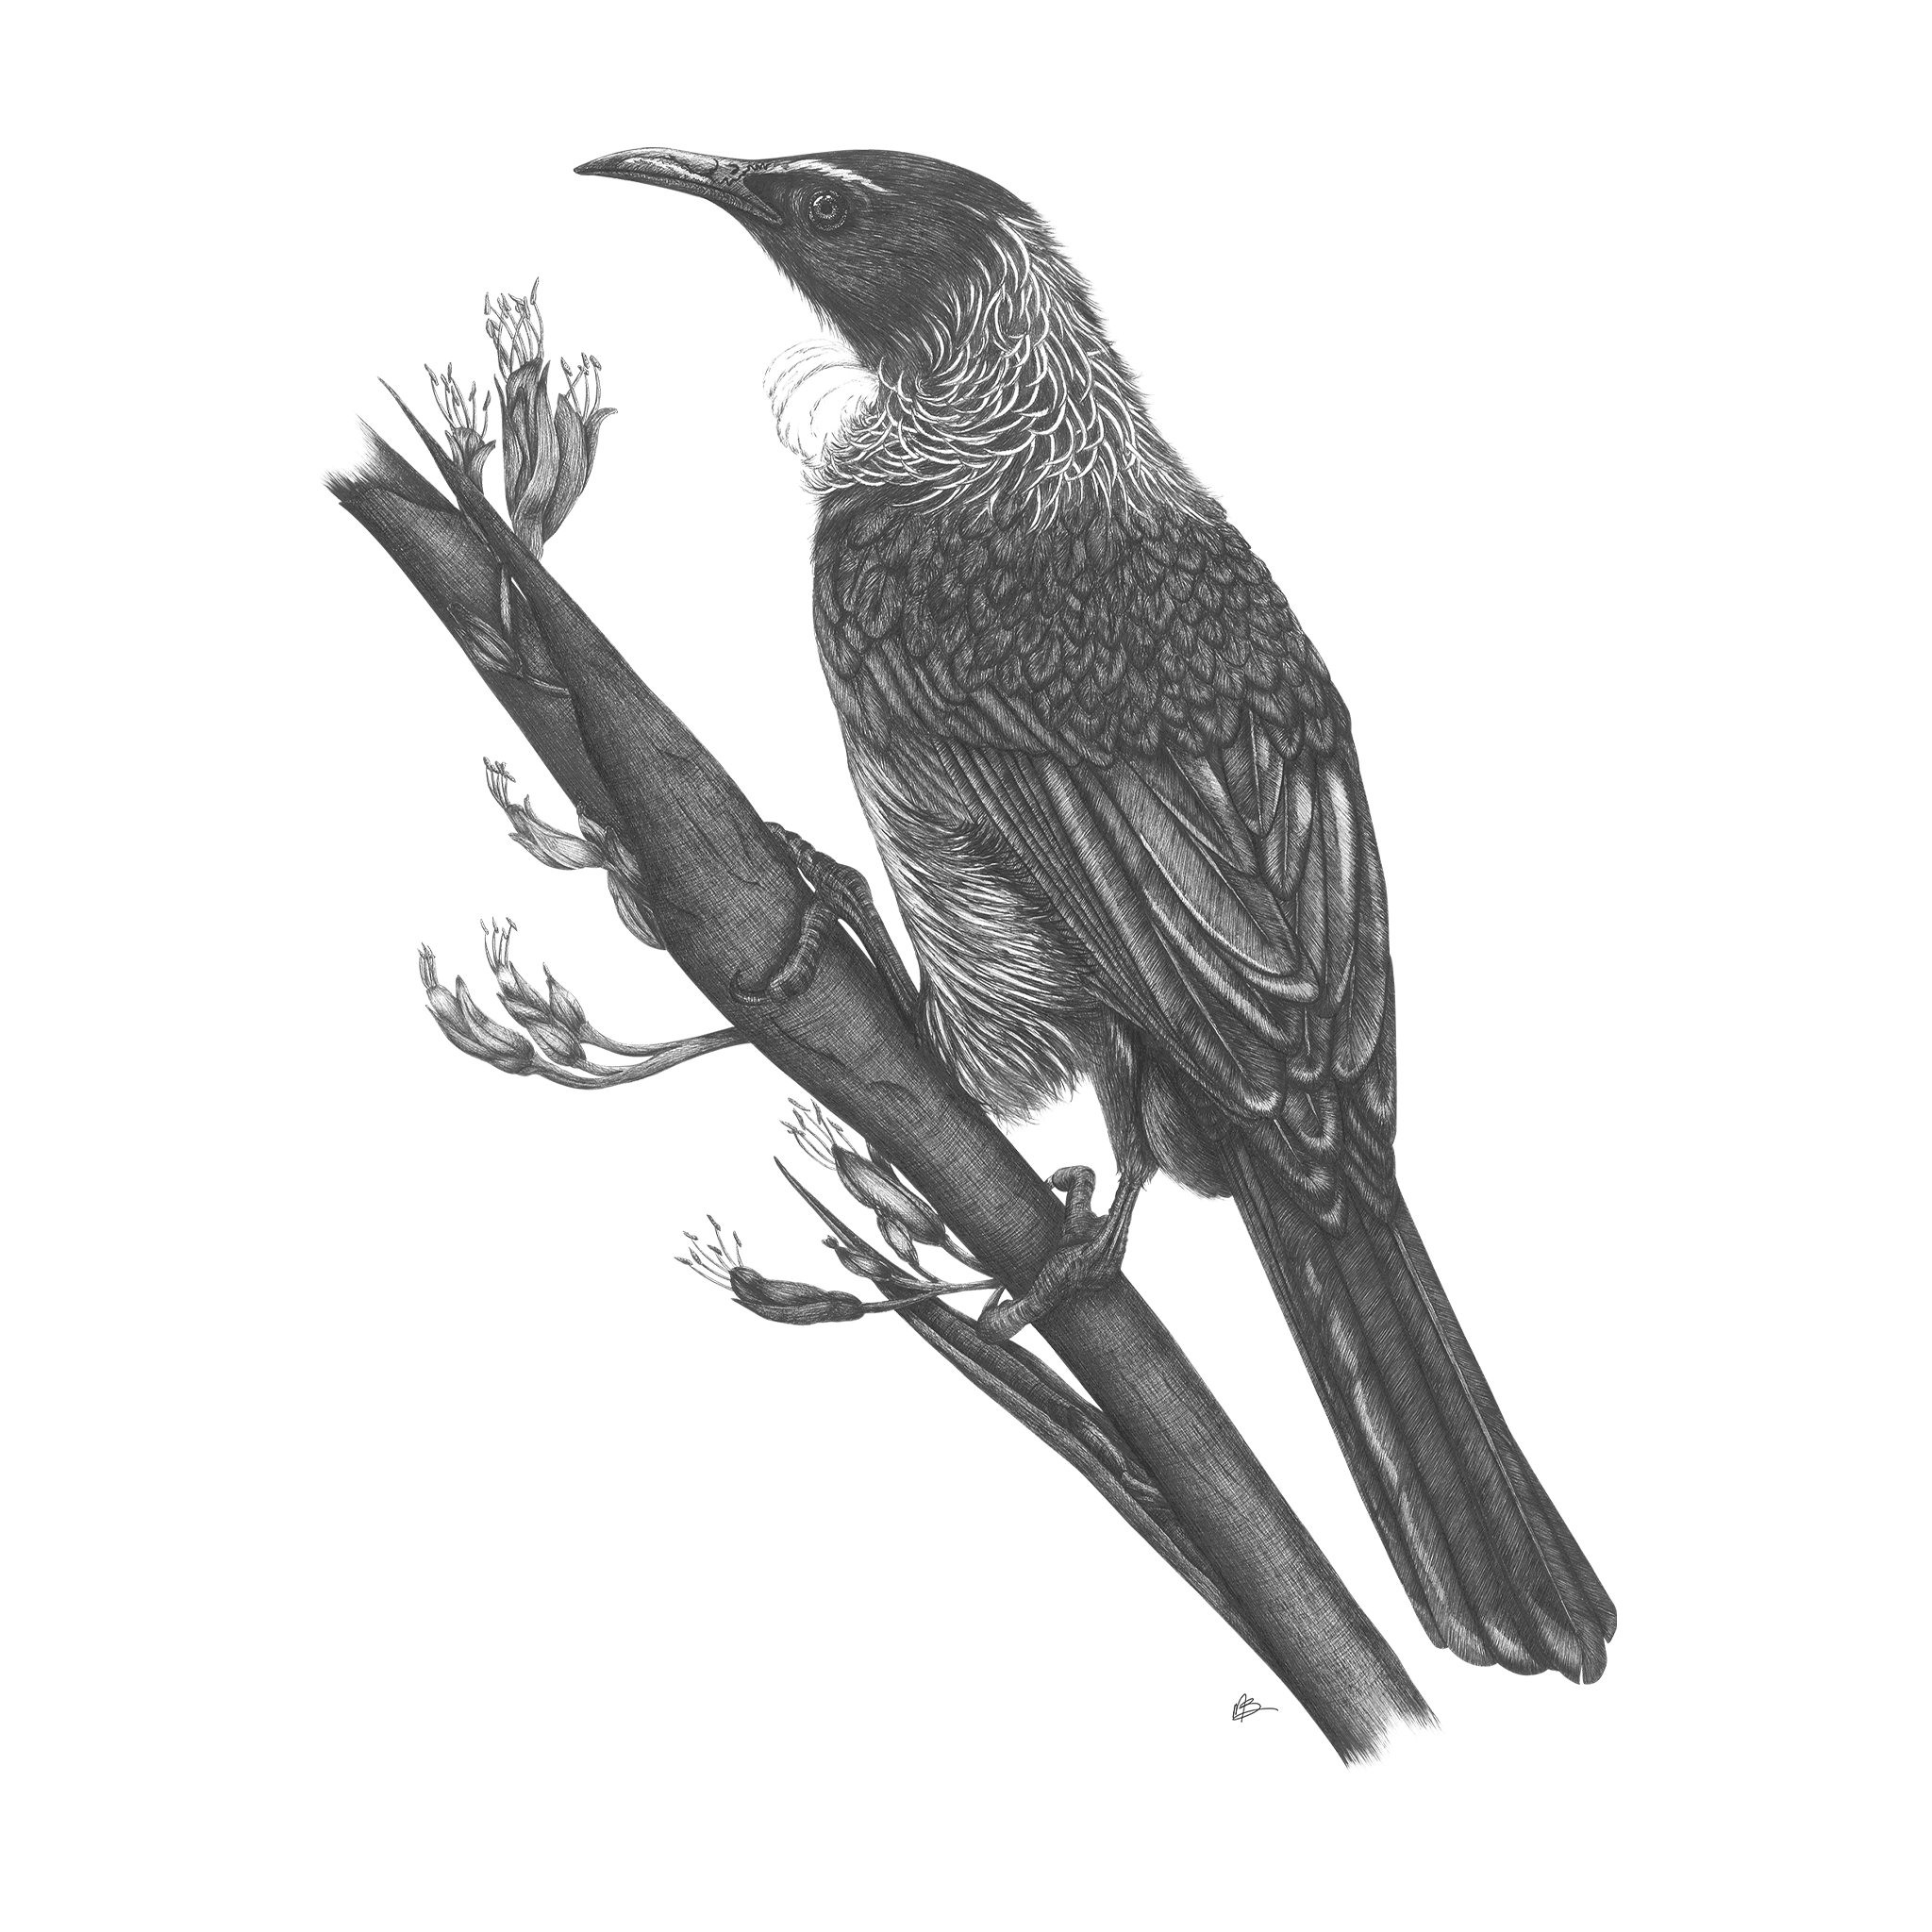 NZ Bird Art Prints - doodlewear